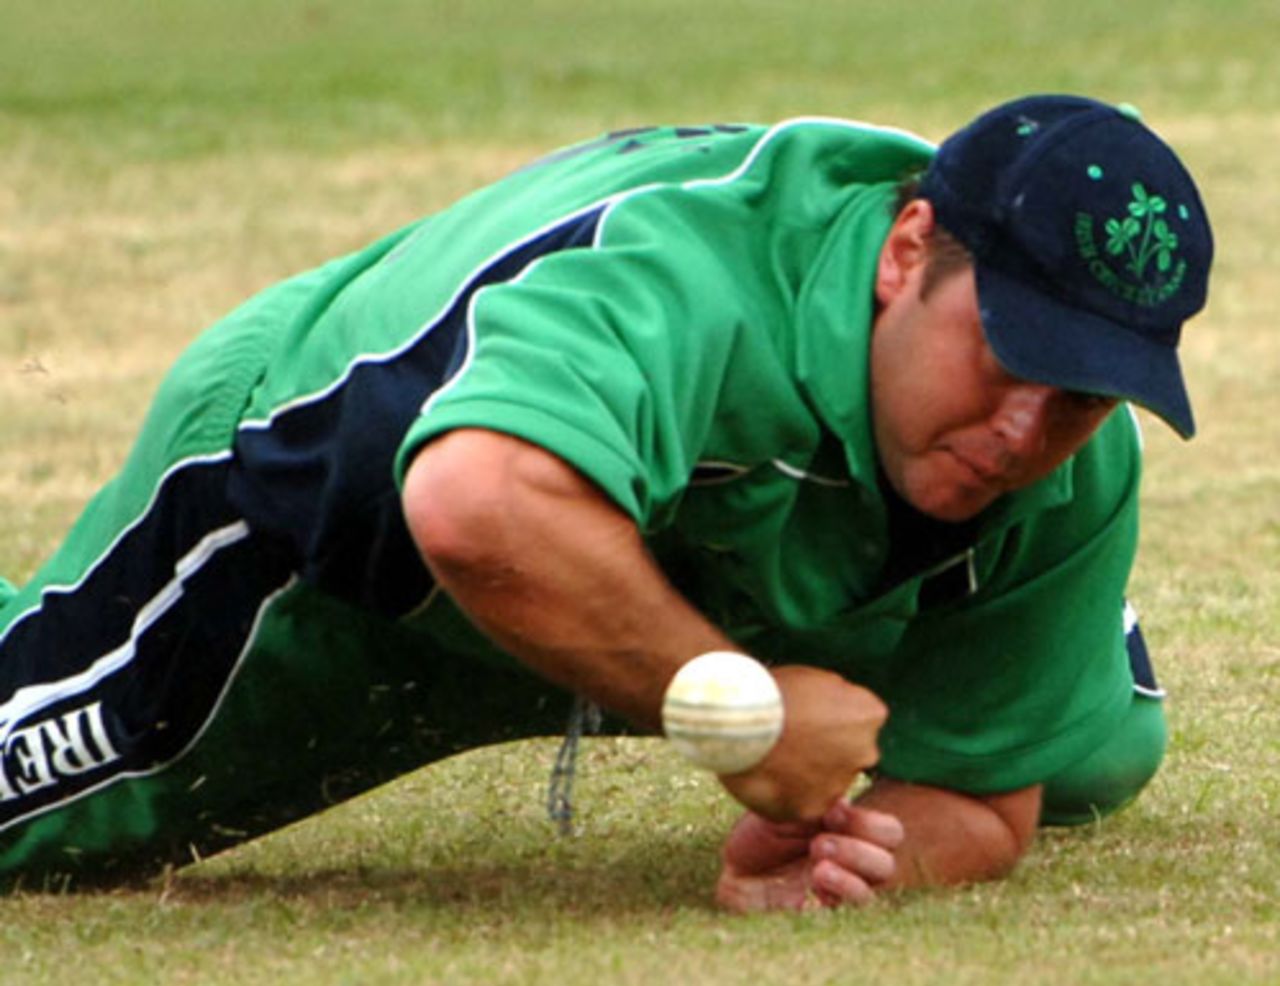 Dave Langford-Smith scrambles to field, Ireland v Scotland, Nairobi Gymkhana, WCL, January 30, 2007 